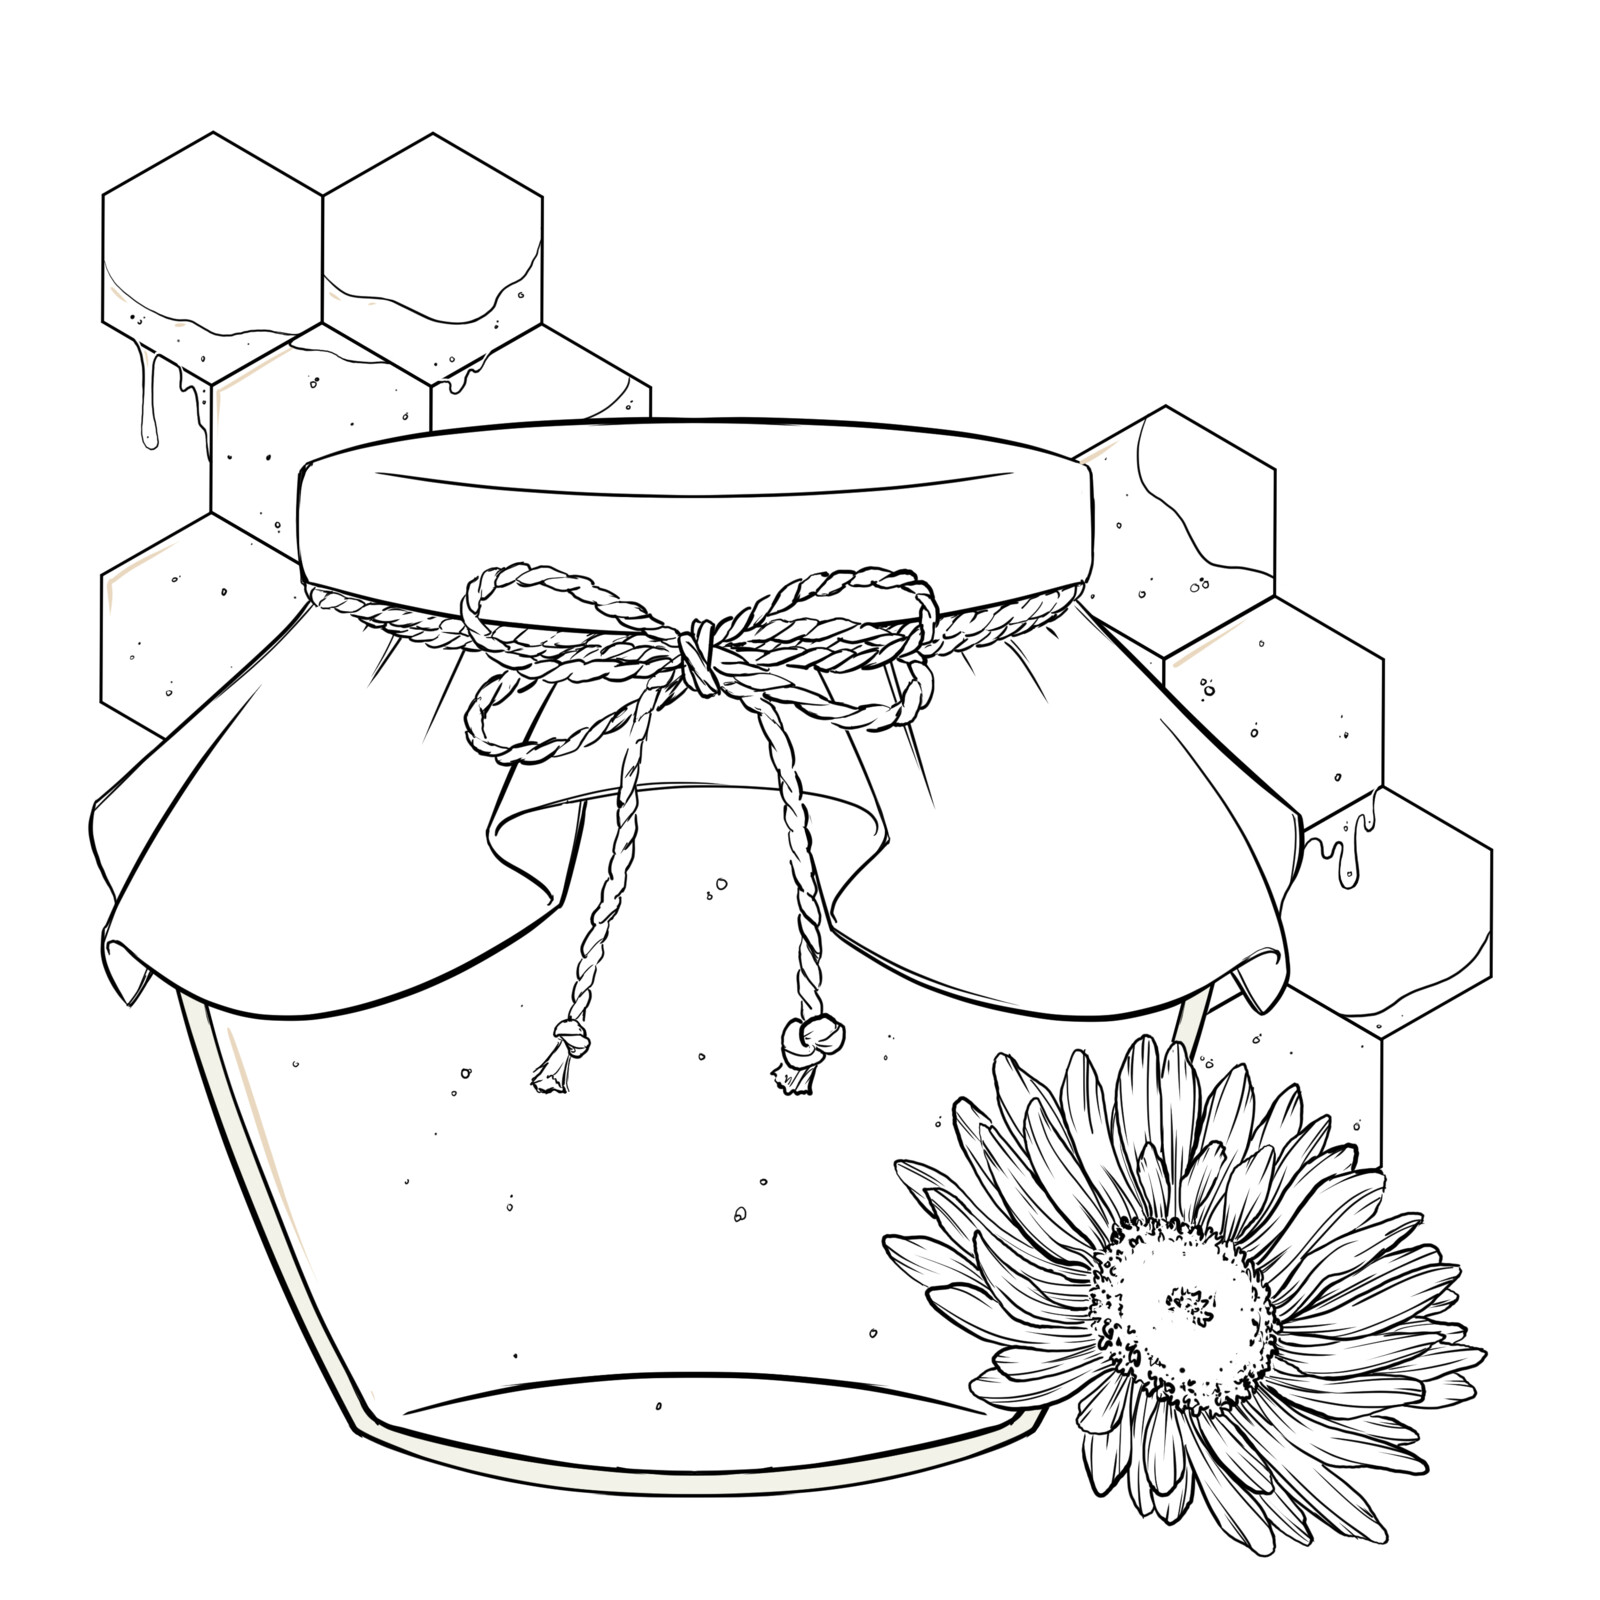 Honey jar 1 line art